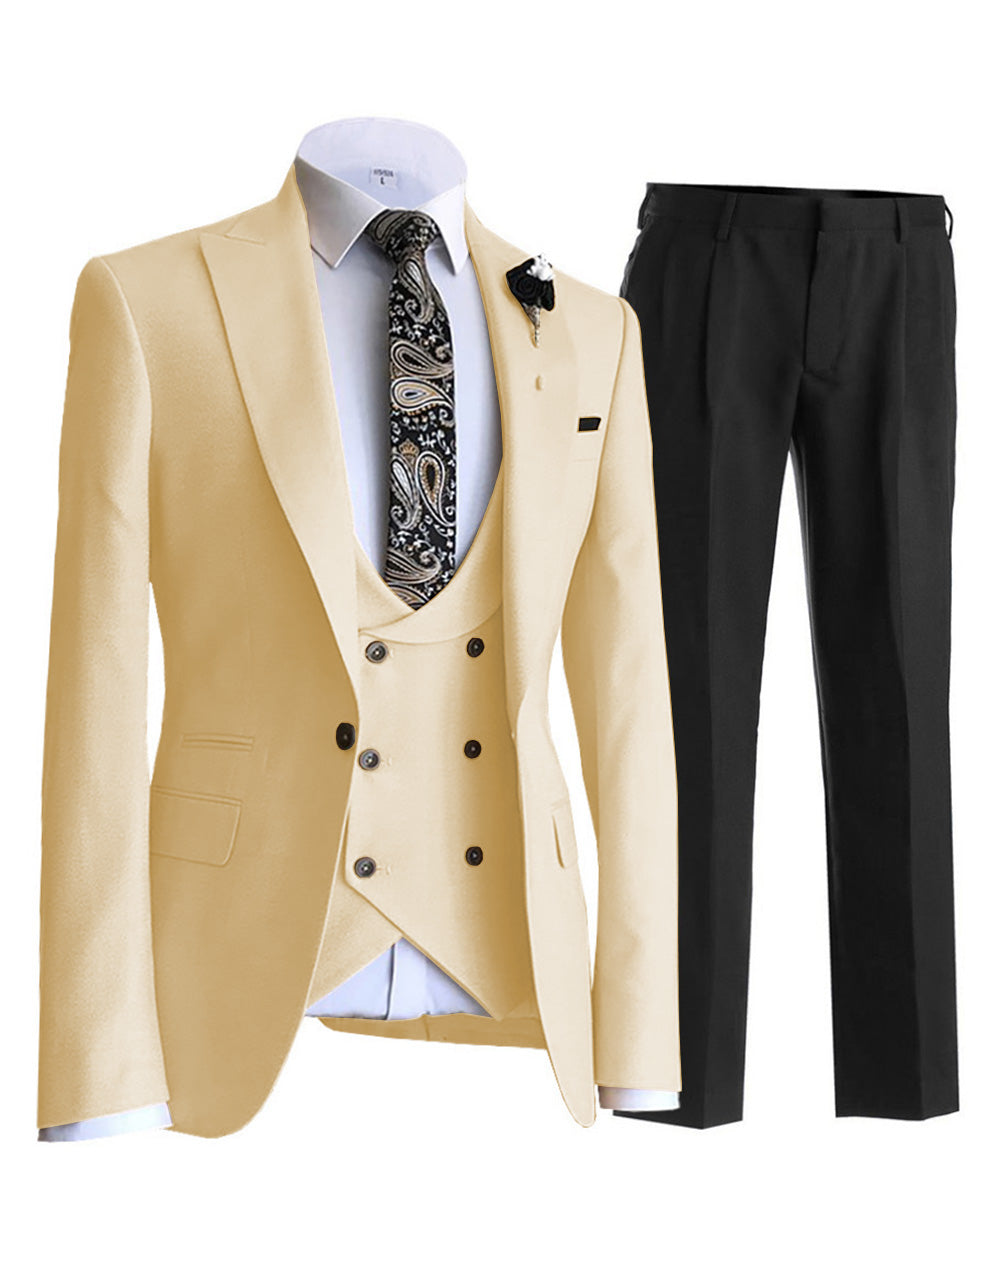 3 Pieces Mens Suit Solid Slim Fit Peak Lapel Tuxedos For Wedding ...